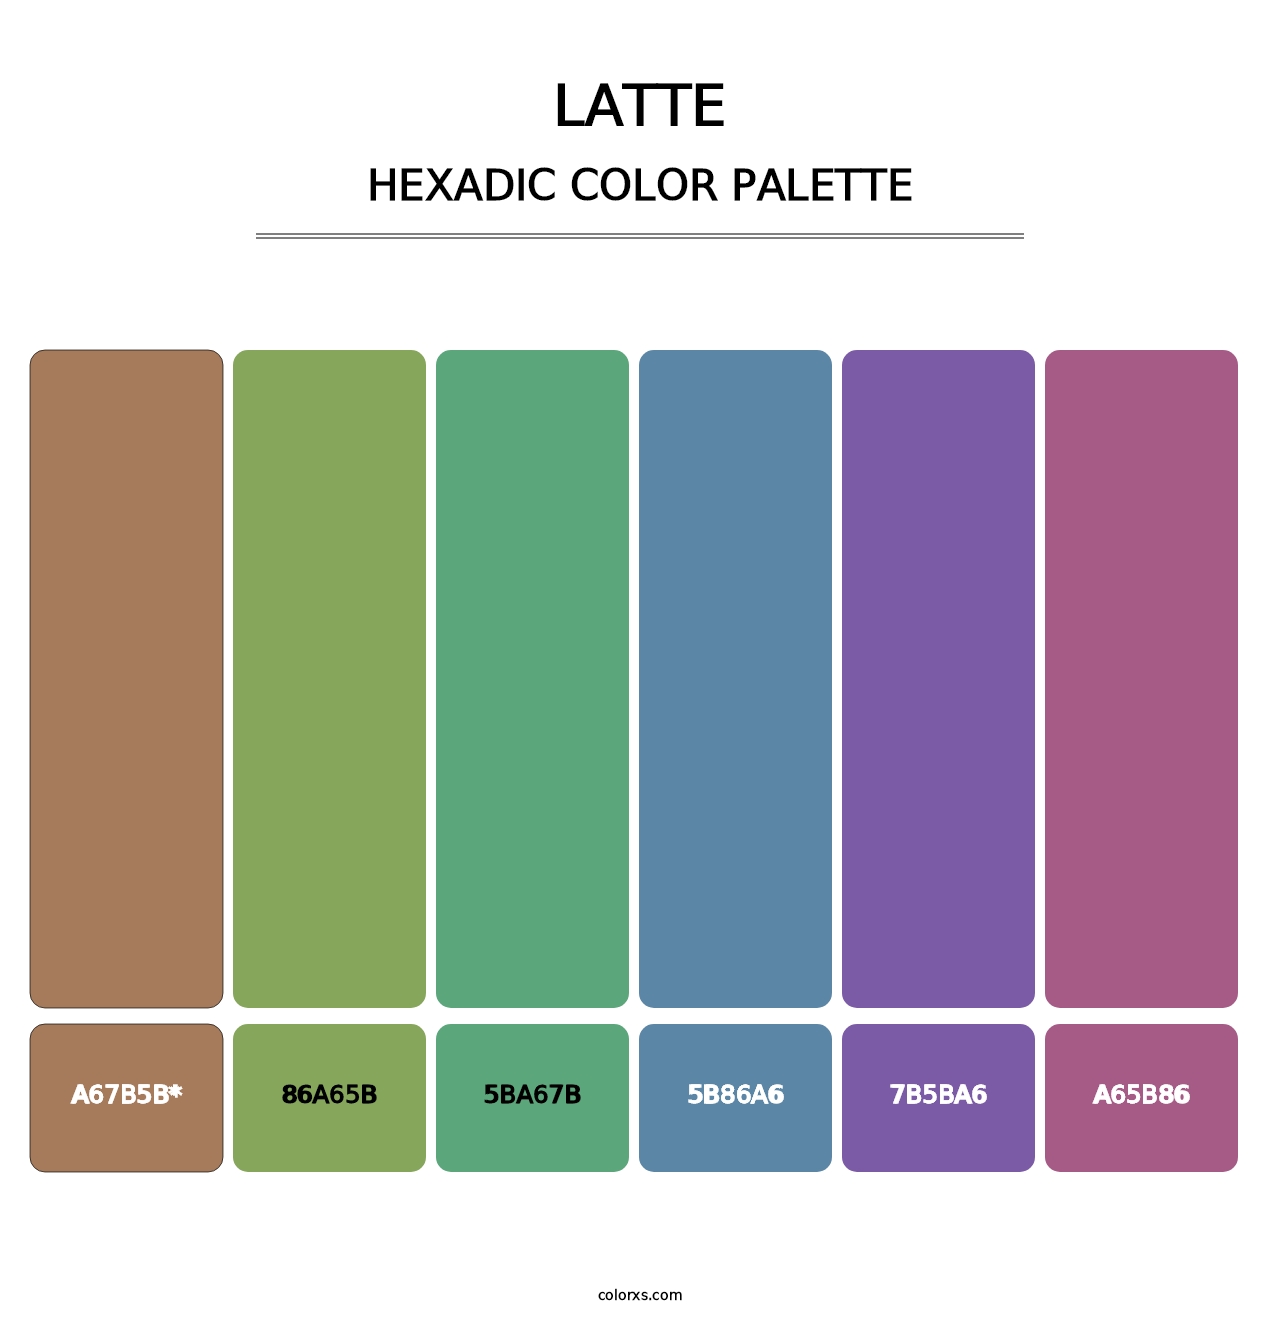 Latte - Hexadic Color Palette